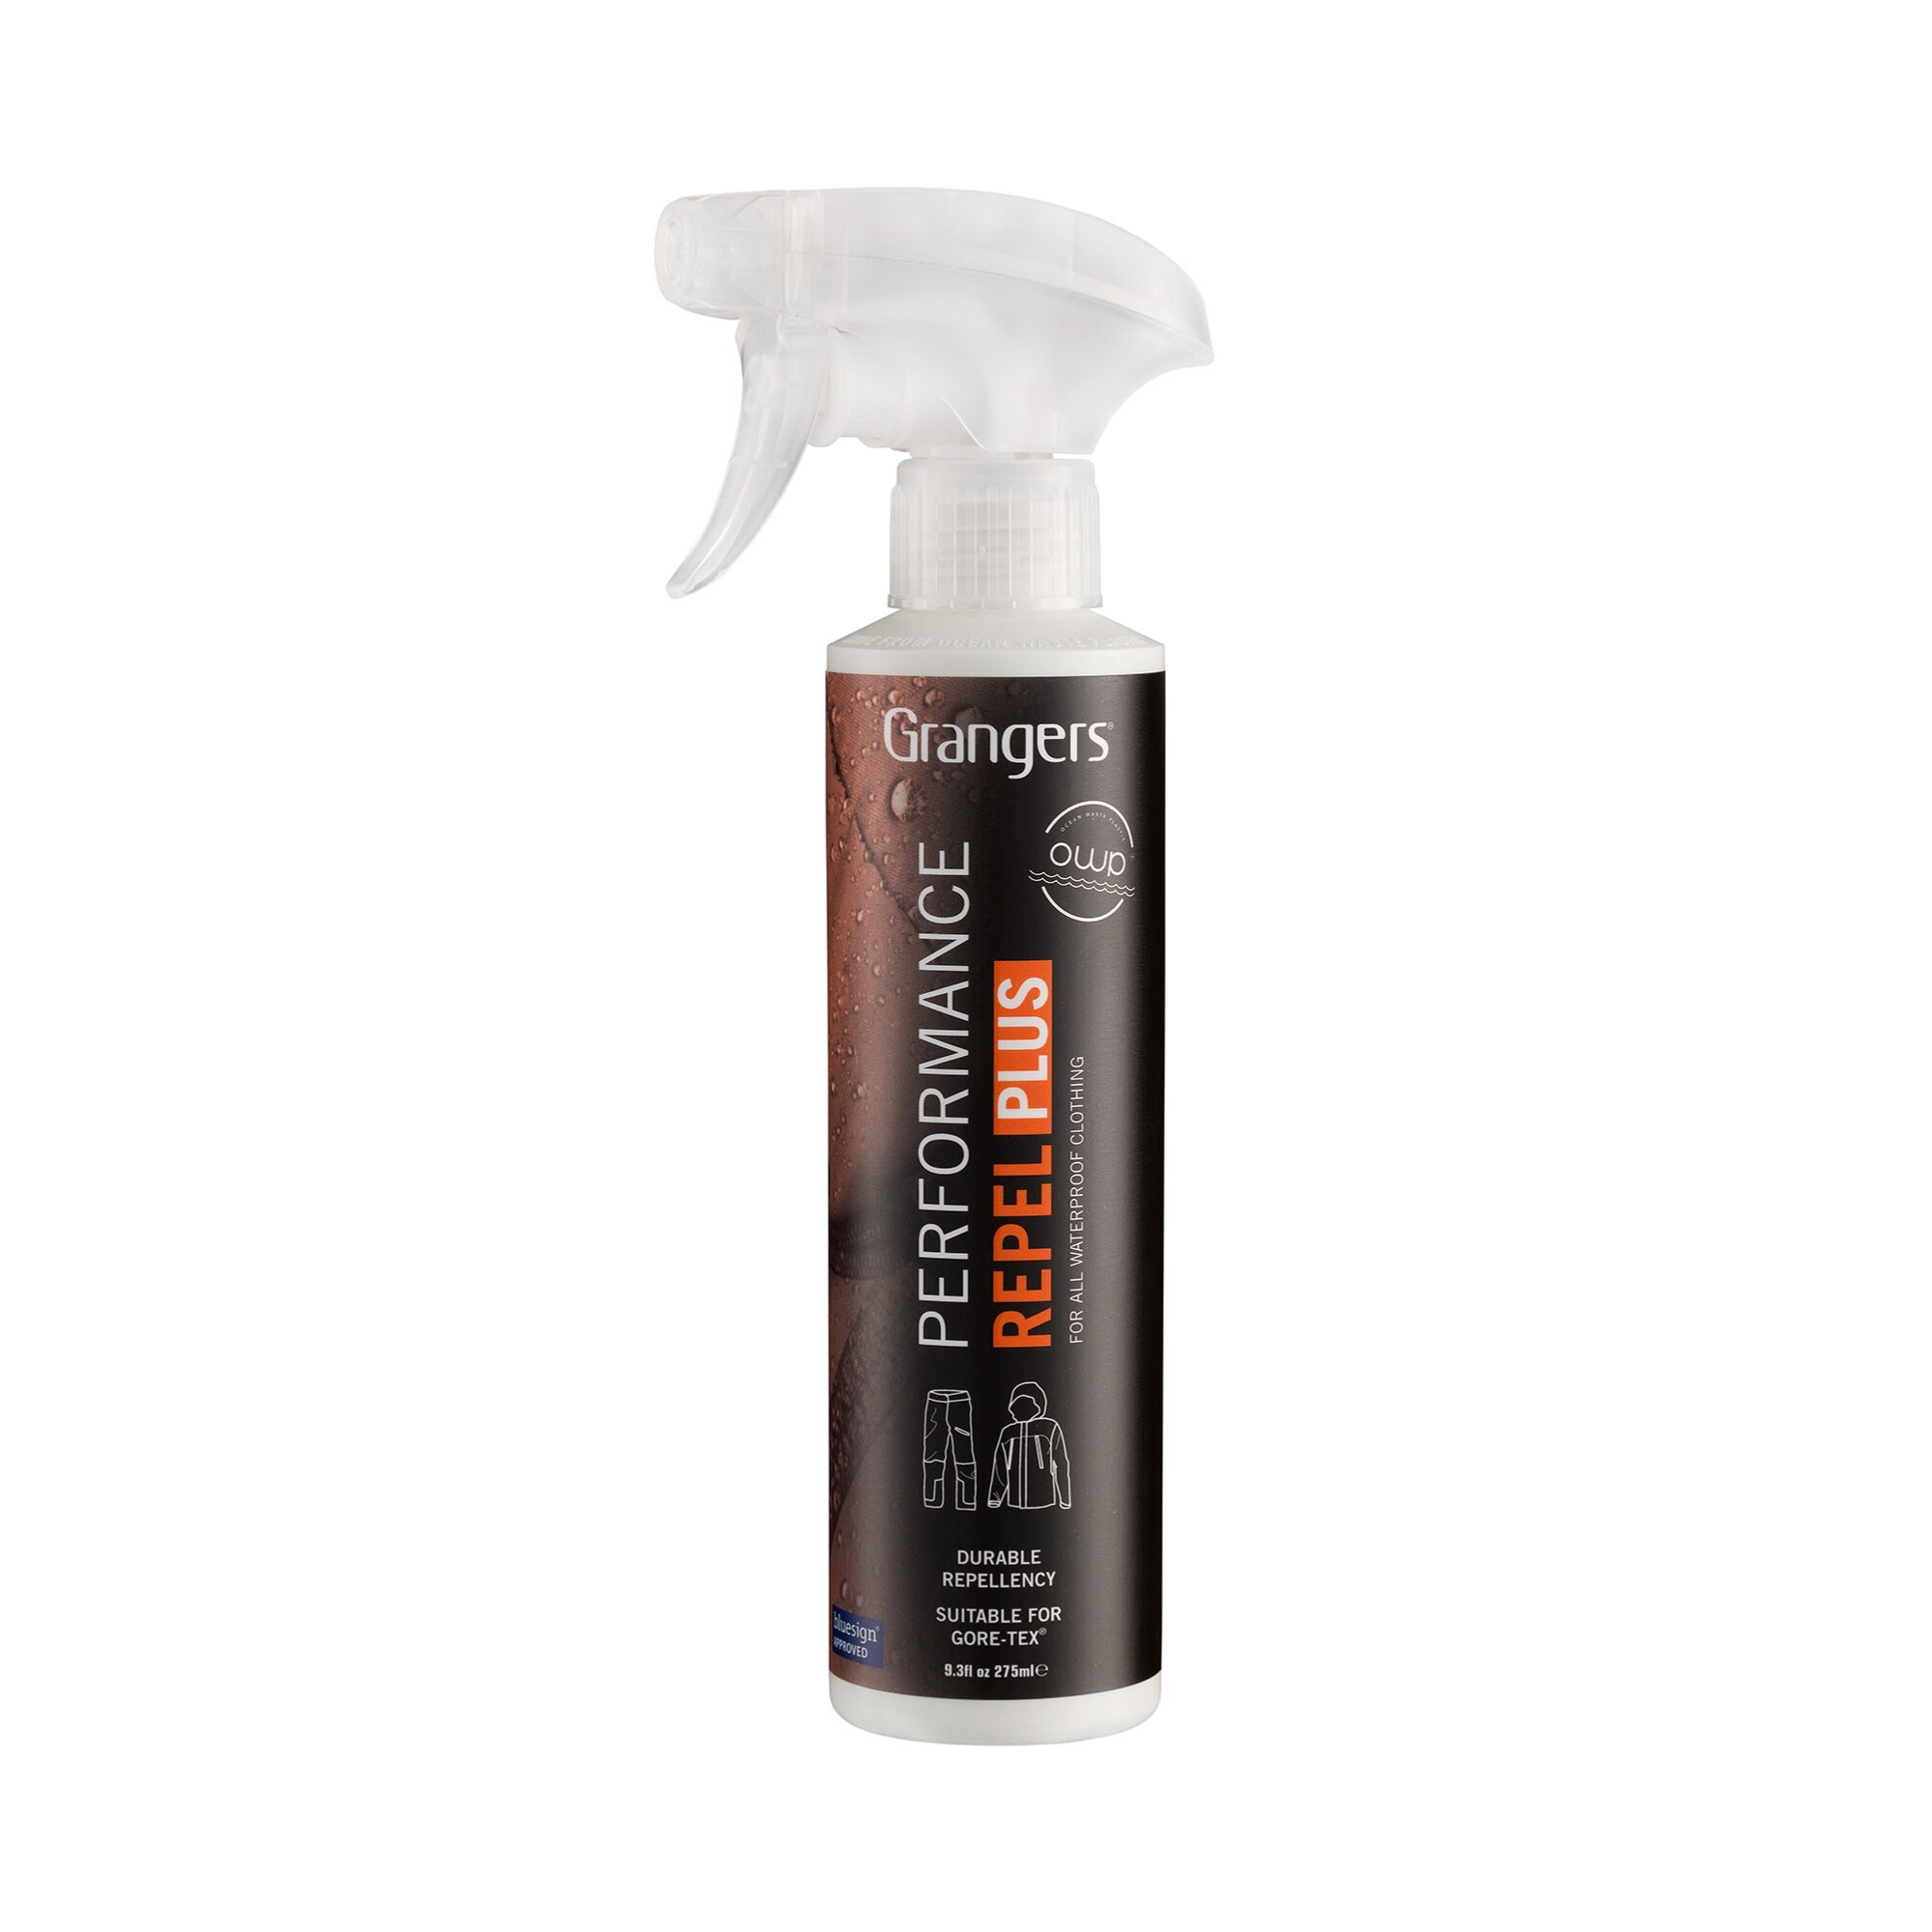 Gear Aid ReviveX Instant Waterproofing Spray by Gear Aid at Fleet Farm